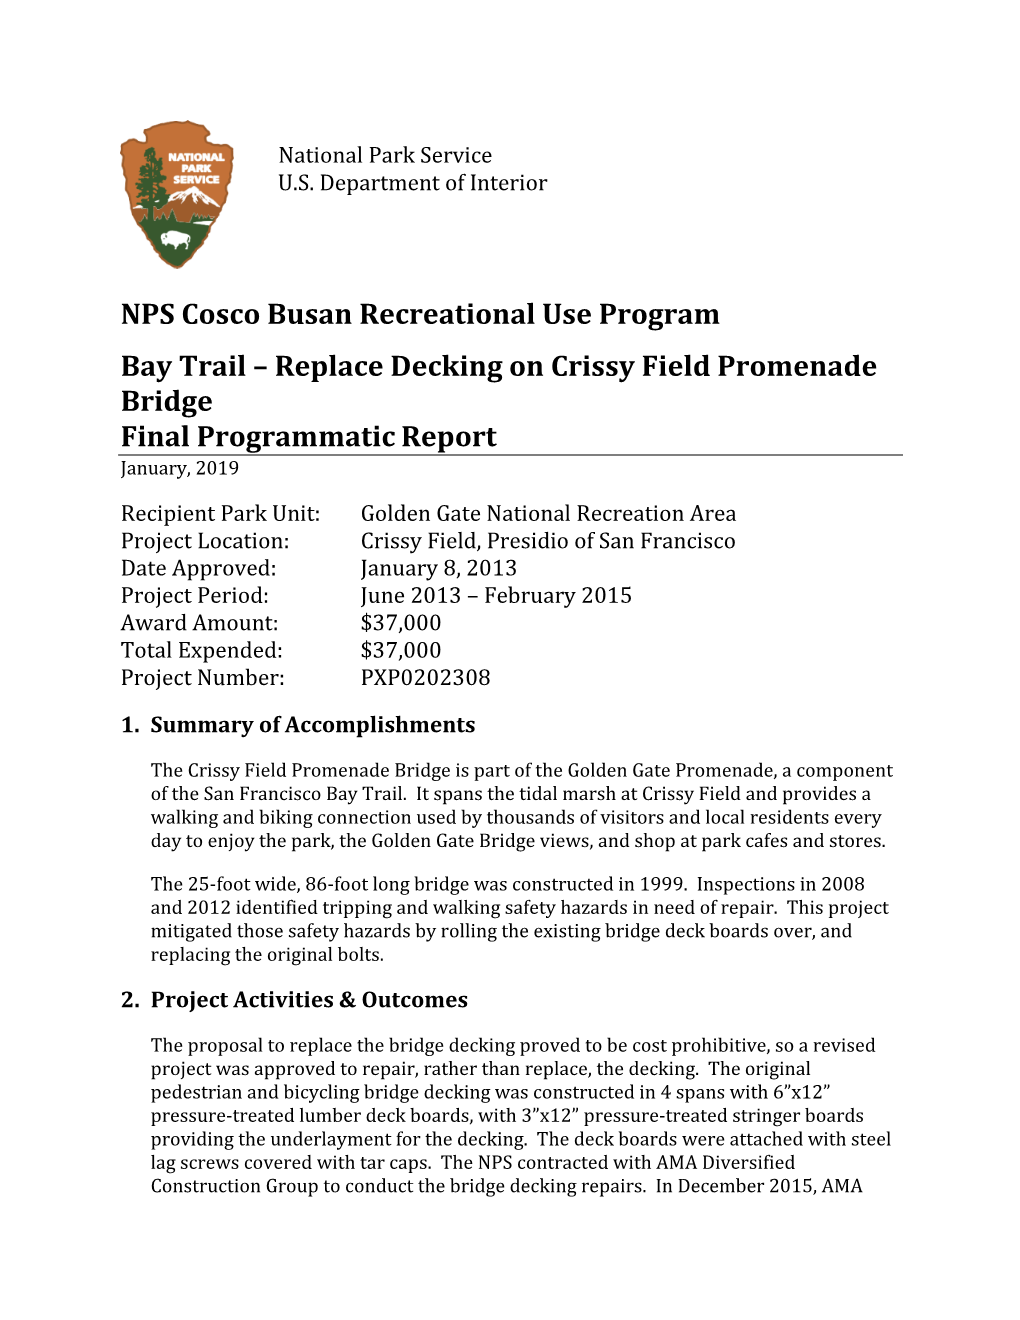 Bay Trail – Replace Decking on Crissy Field Promenade Bridge Final Programmatic Report January, 2019